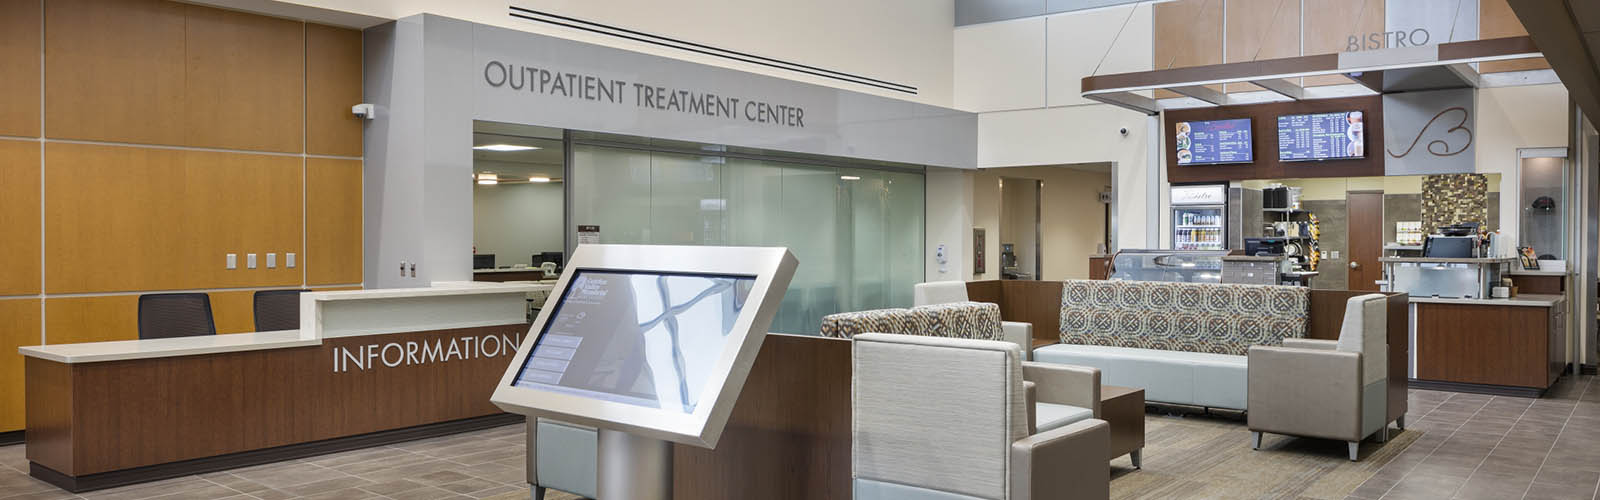 Golden Valley Memorial Hospital - Outpatient Expansion 2